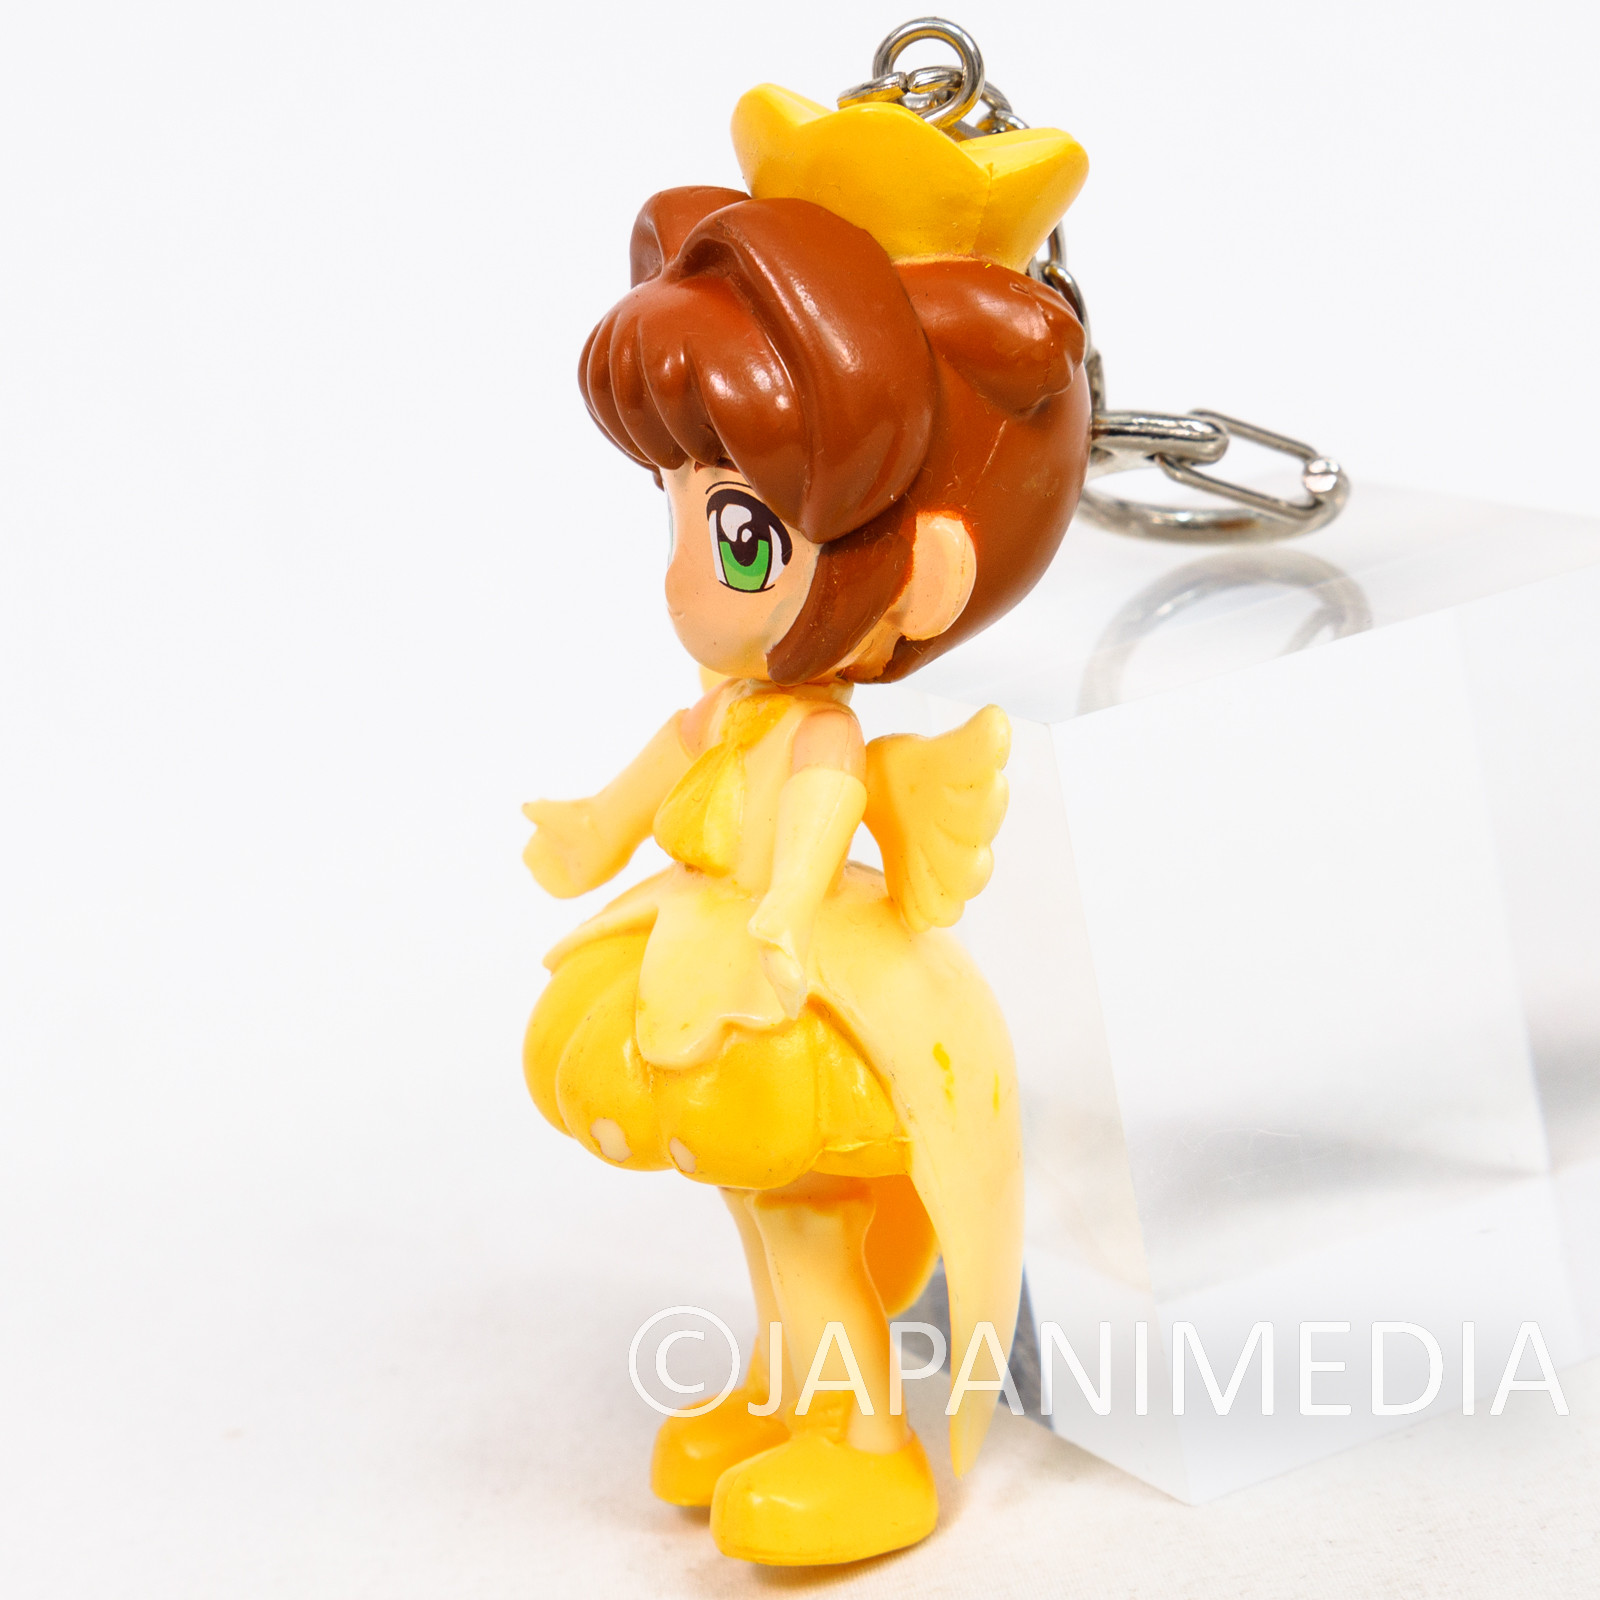 Cardcaptor Sakura Battle Costume D Mascot Figure 3" Keychain CLAMP JAPAN ANIME